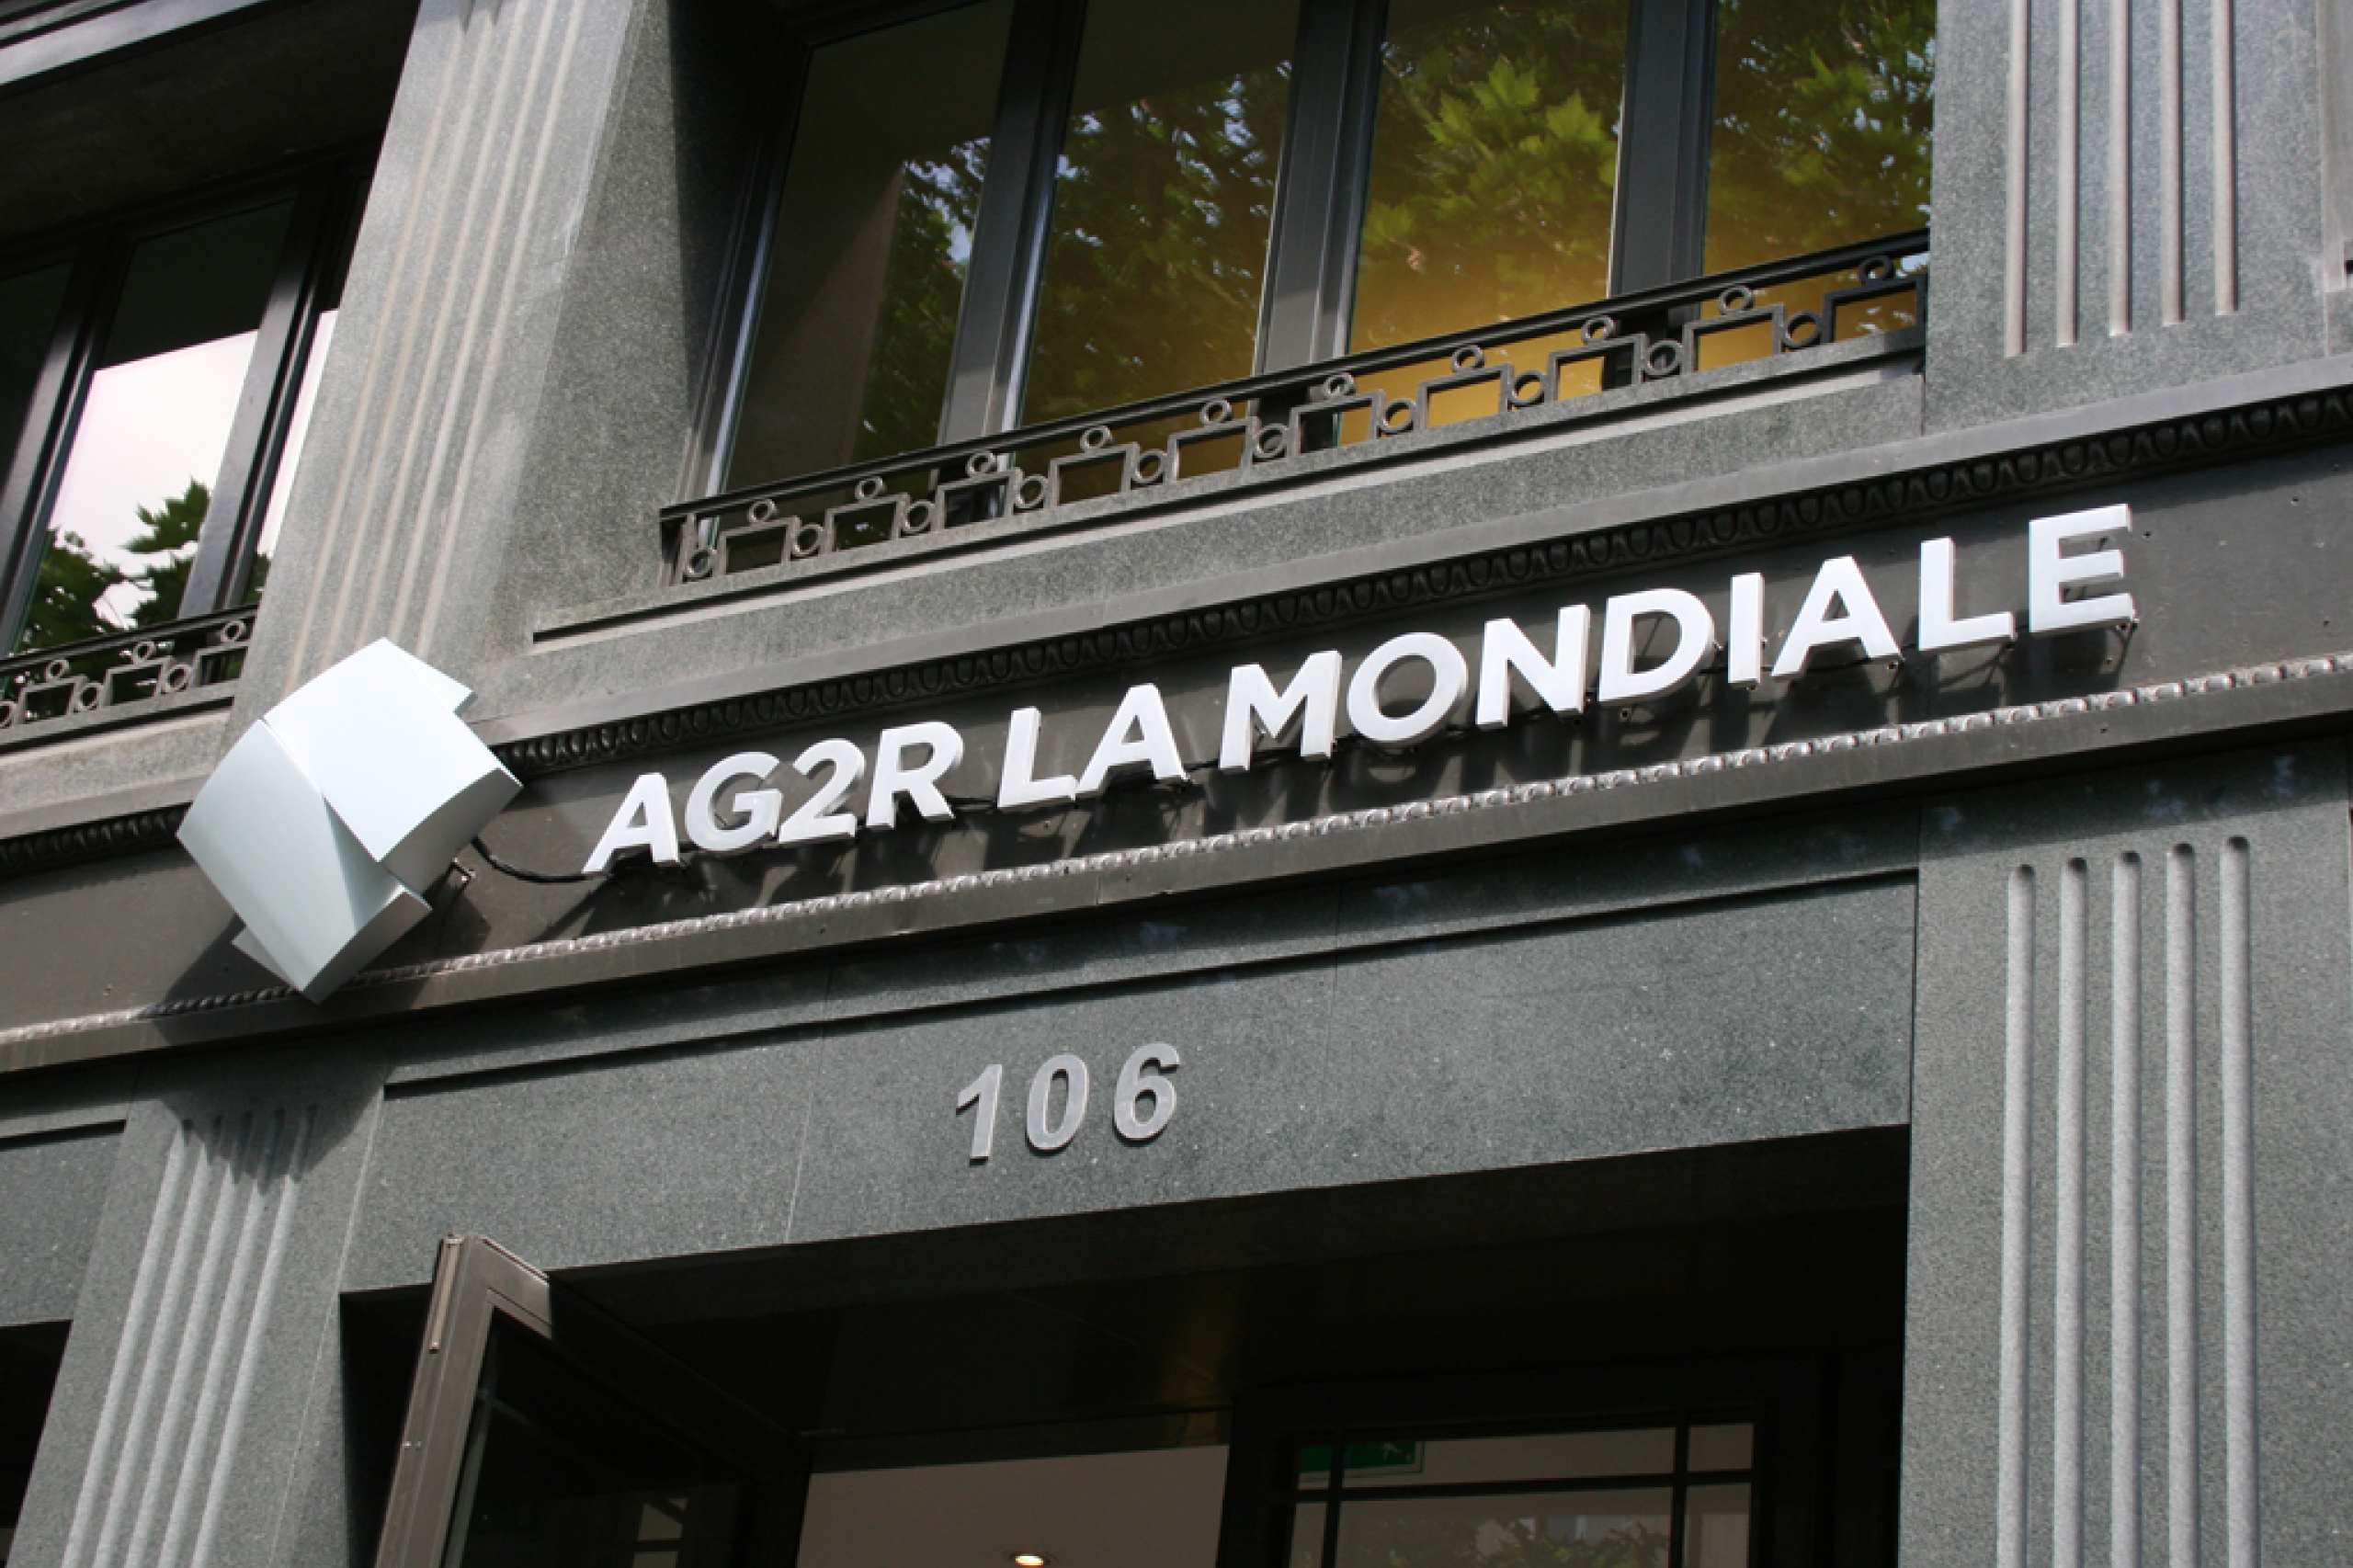 studio dumbar design visual brand identity AG2R LA MONDIALE French insurance company exterior signage logo design